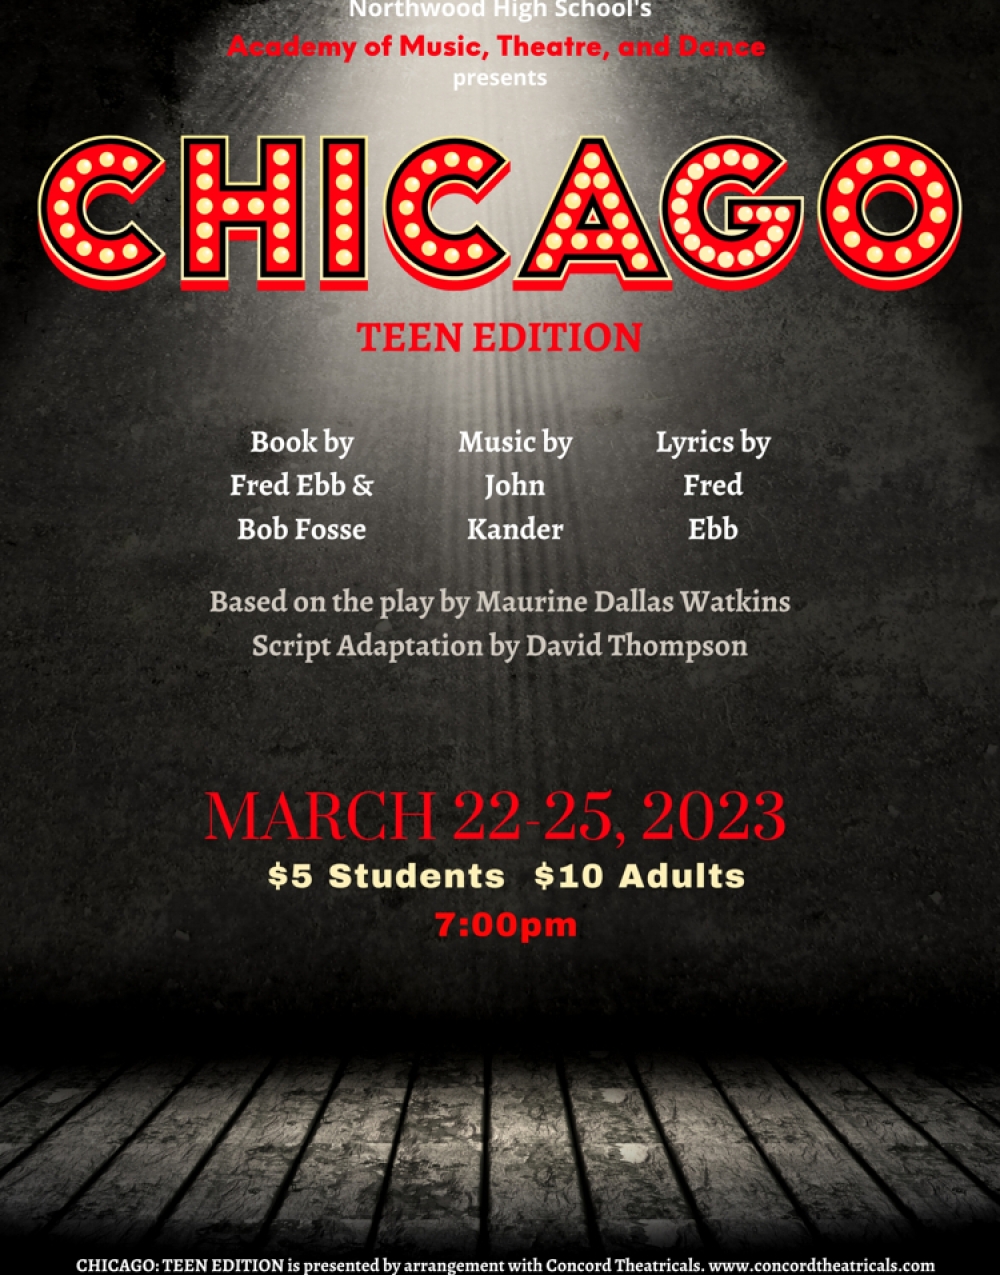 Chicago: Teen Edition at Northwood High School